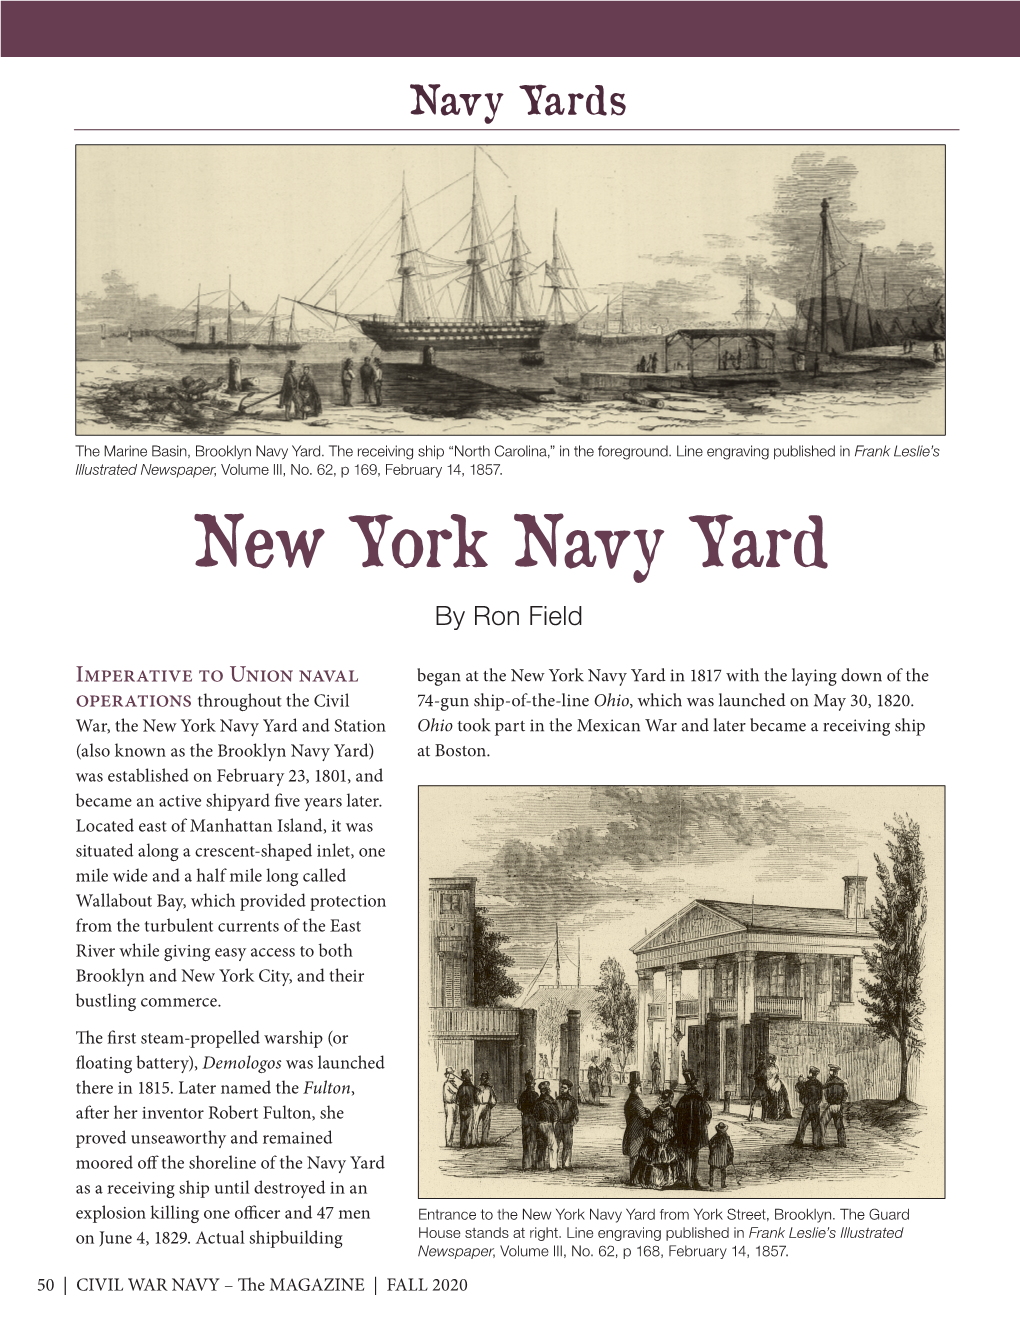 New York Navy Yard by Ron Field